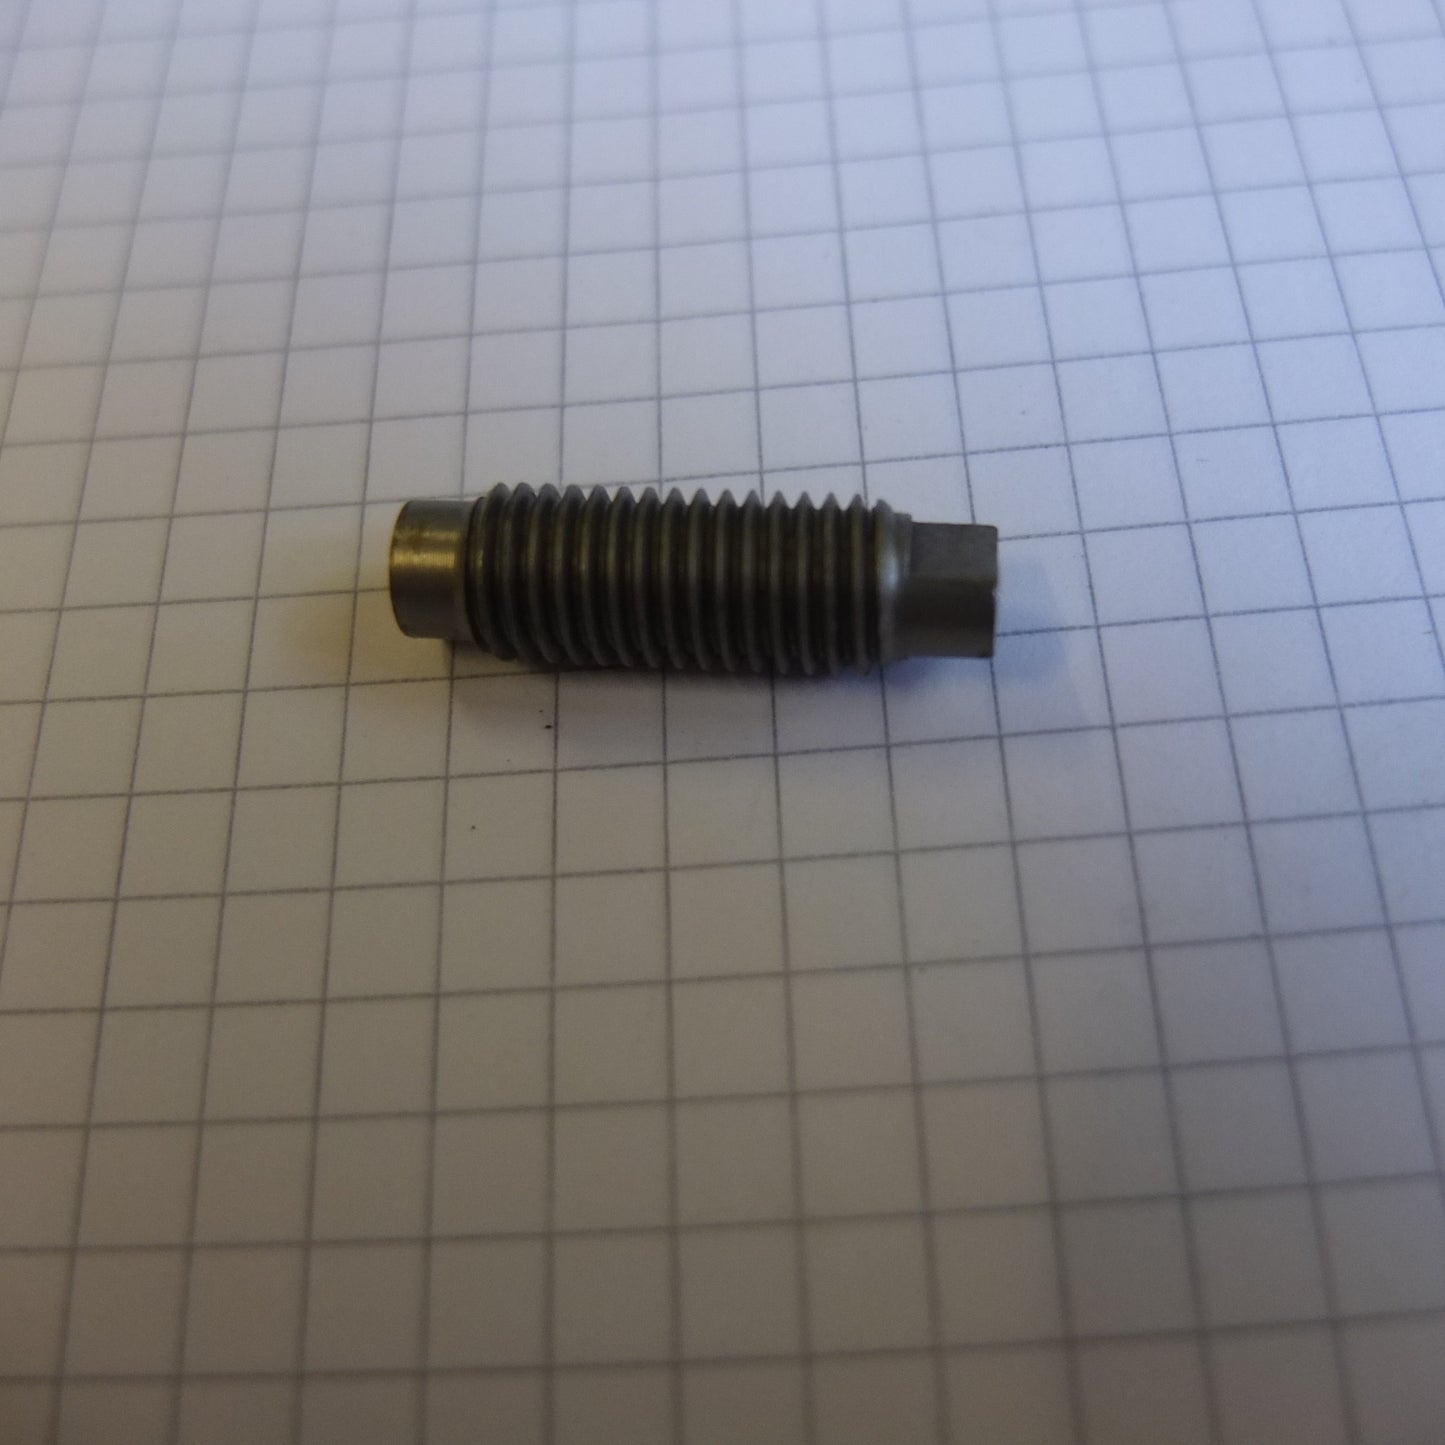 P1/014 Tappet screw